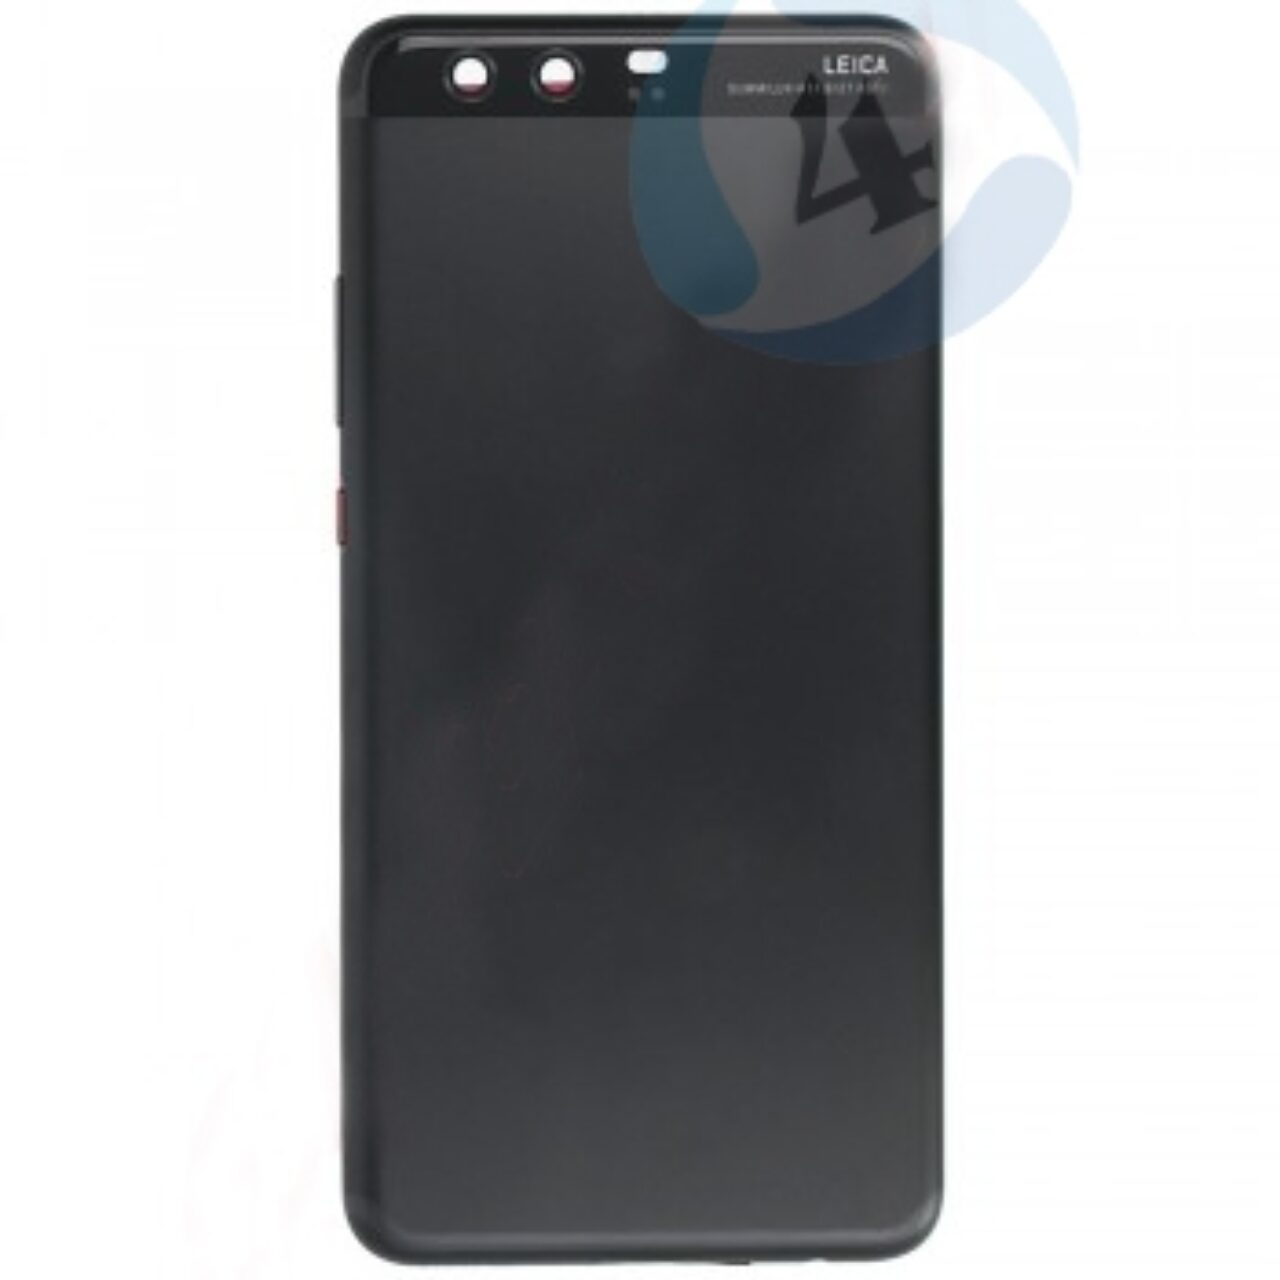 Huawei p10 plus battery cover black